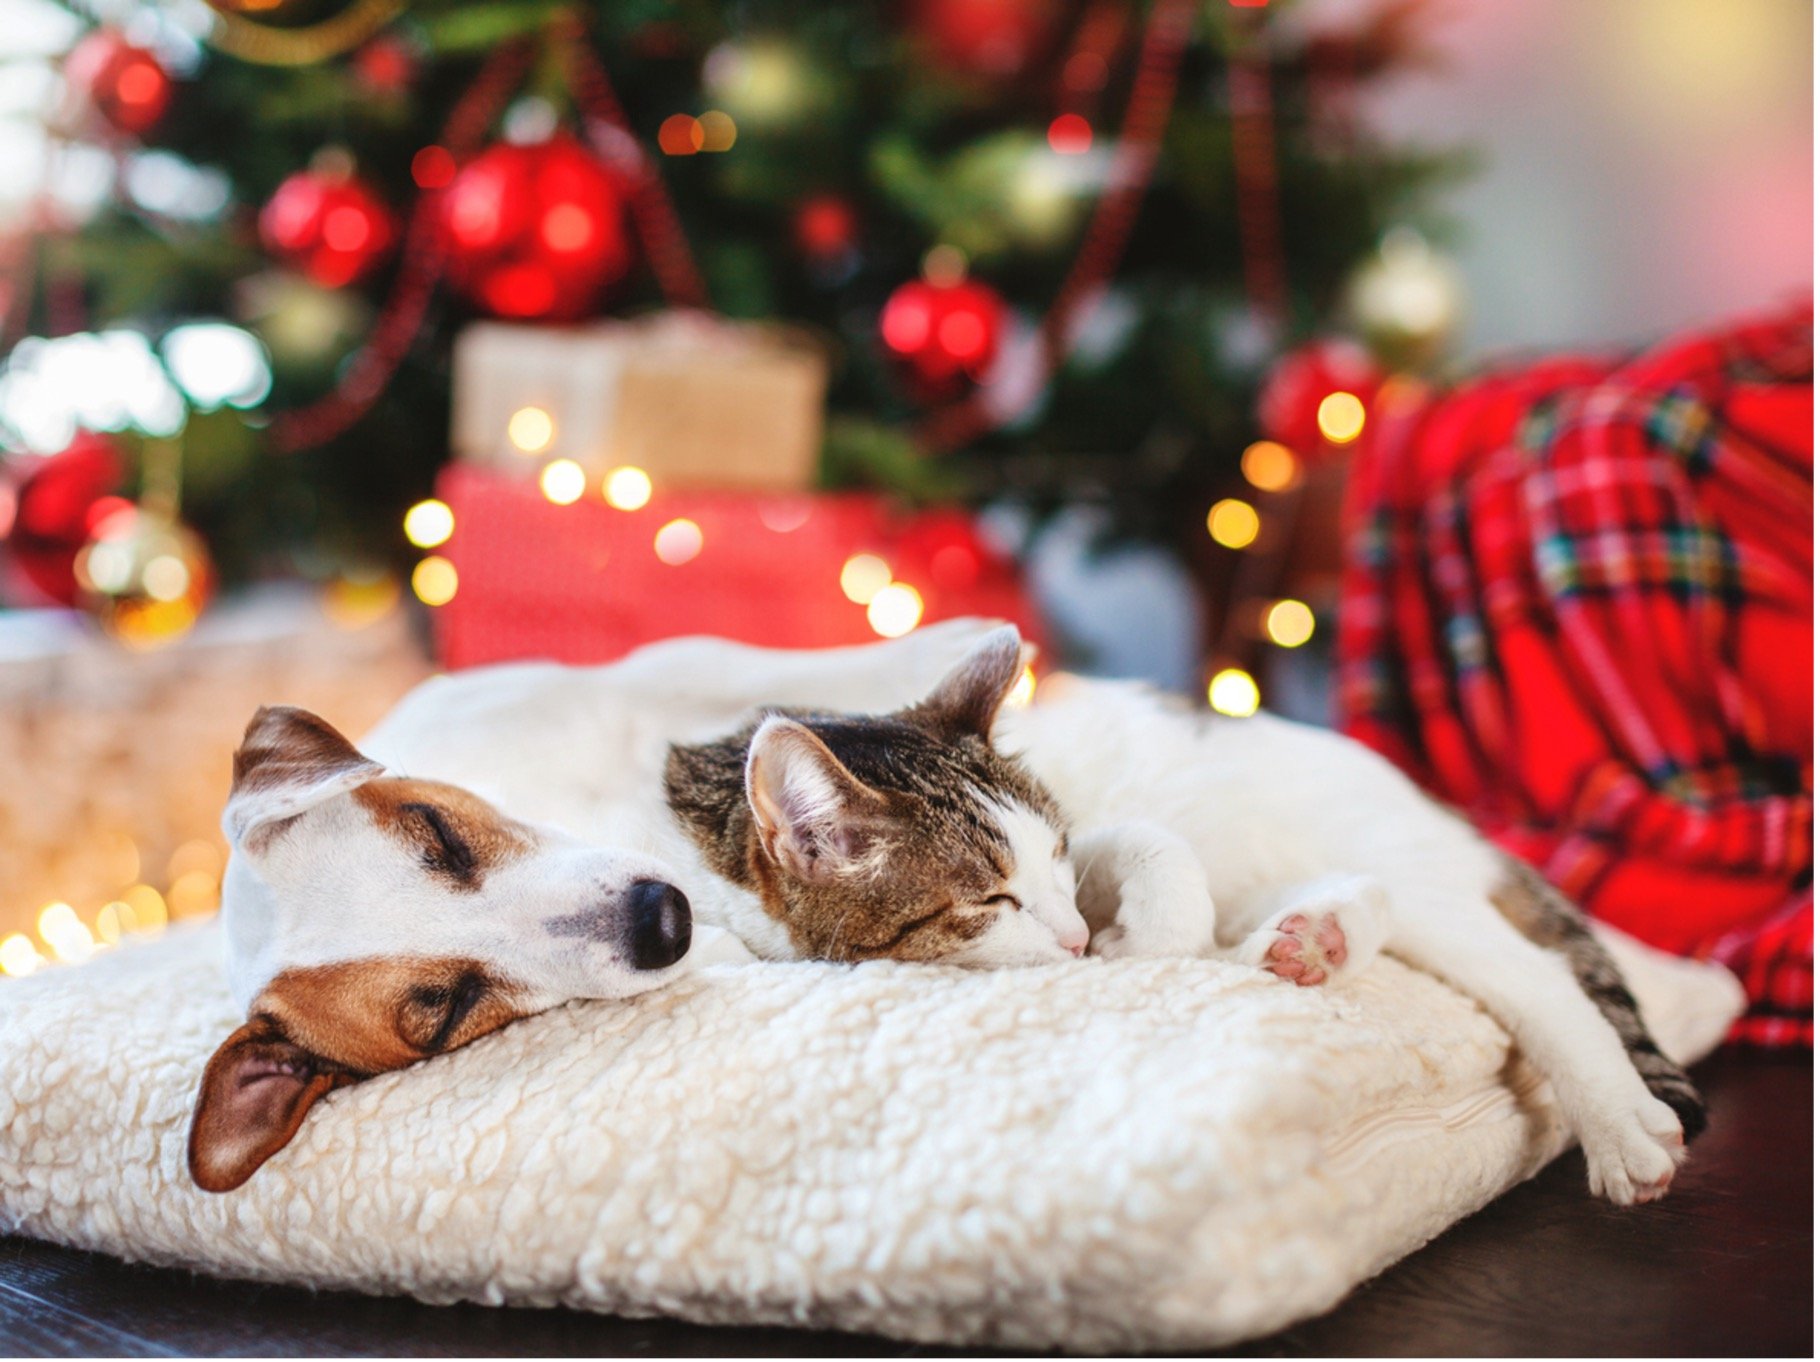 Cat and dog sleeping near Christmas tree